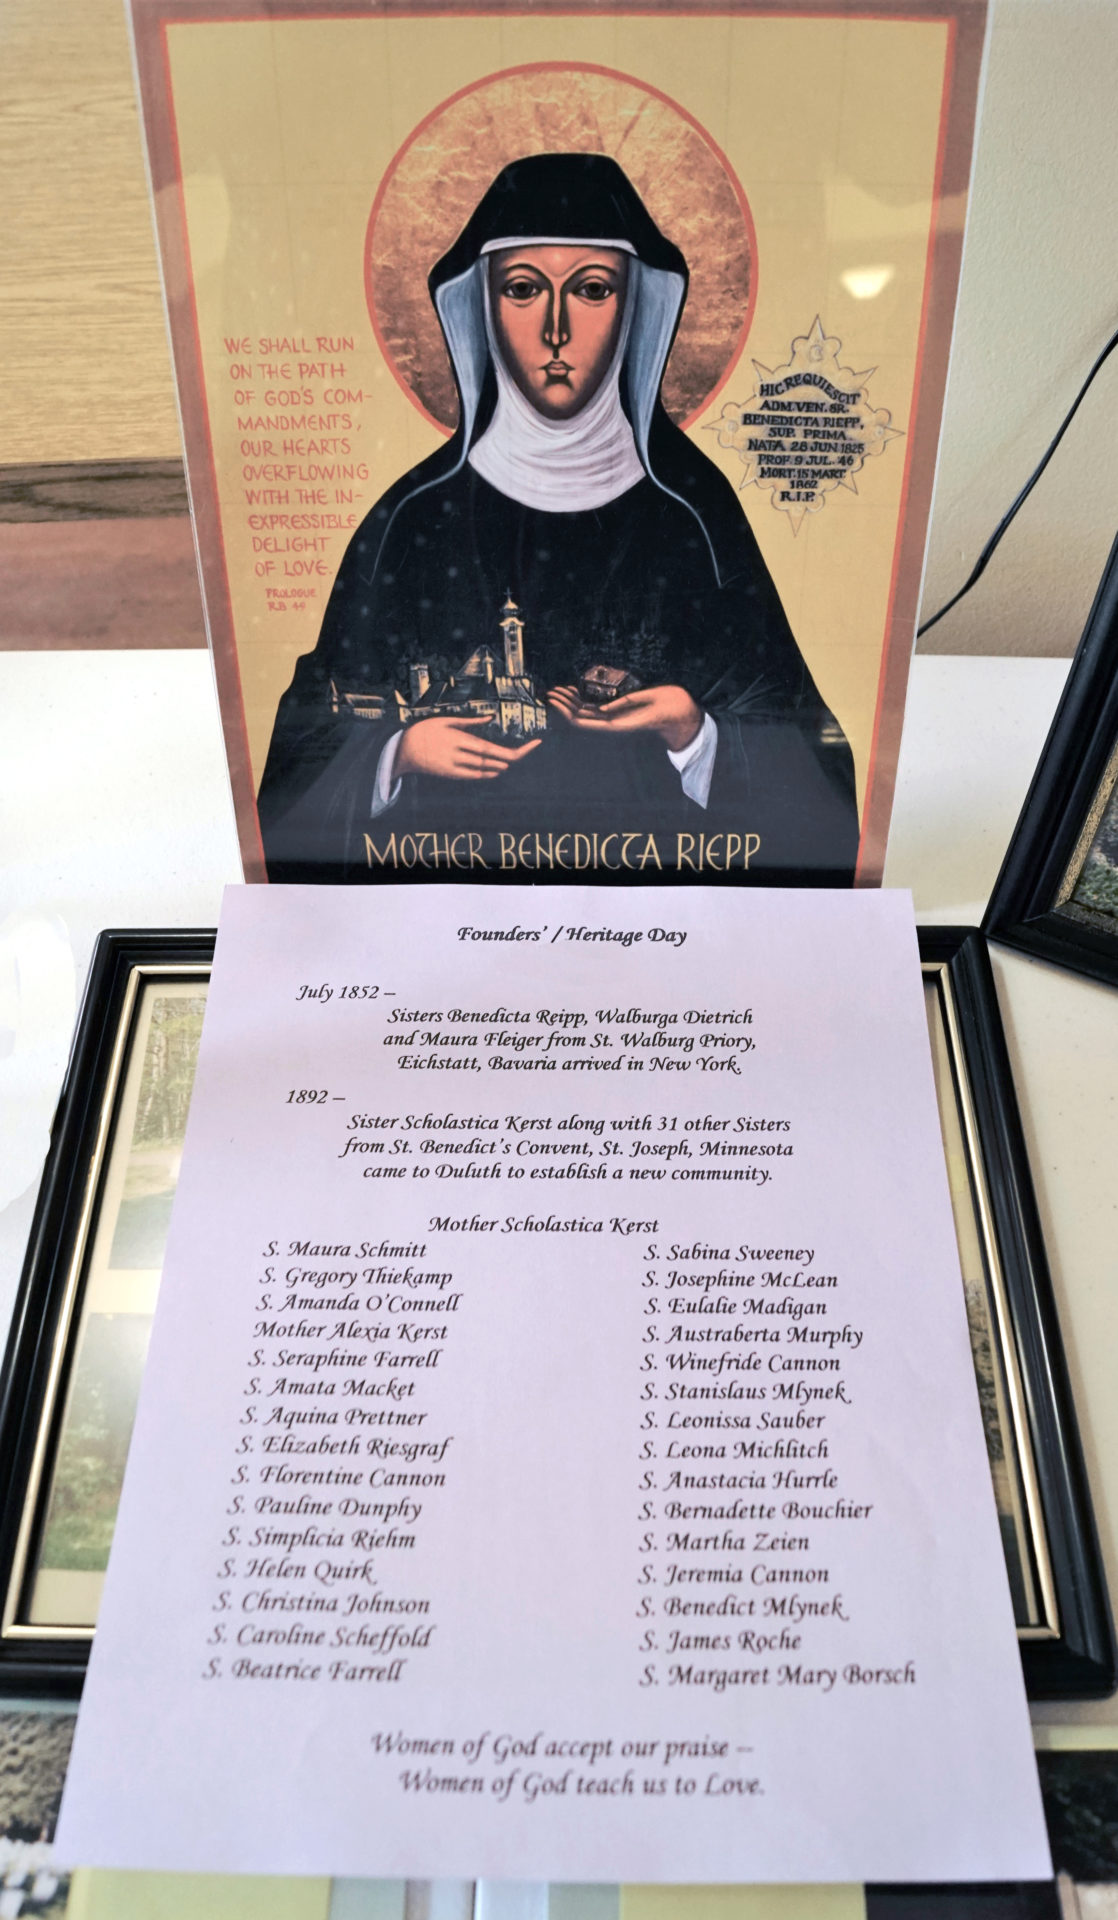 Icon of Mother Benedicta Riepp, founder of American Benedictinism